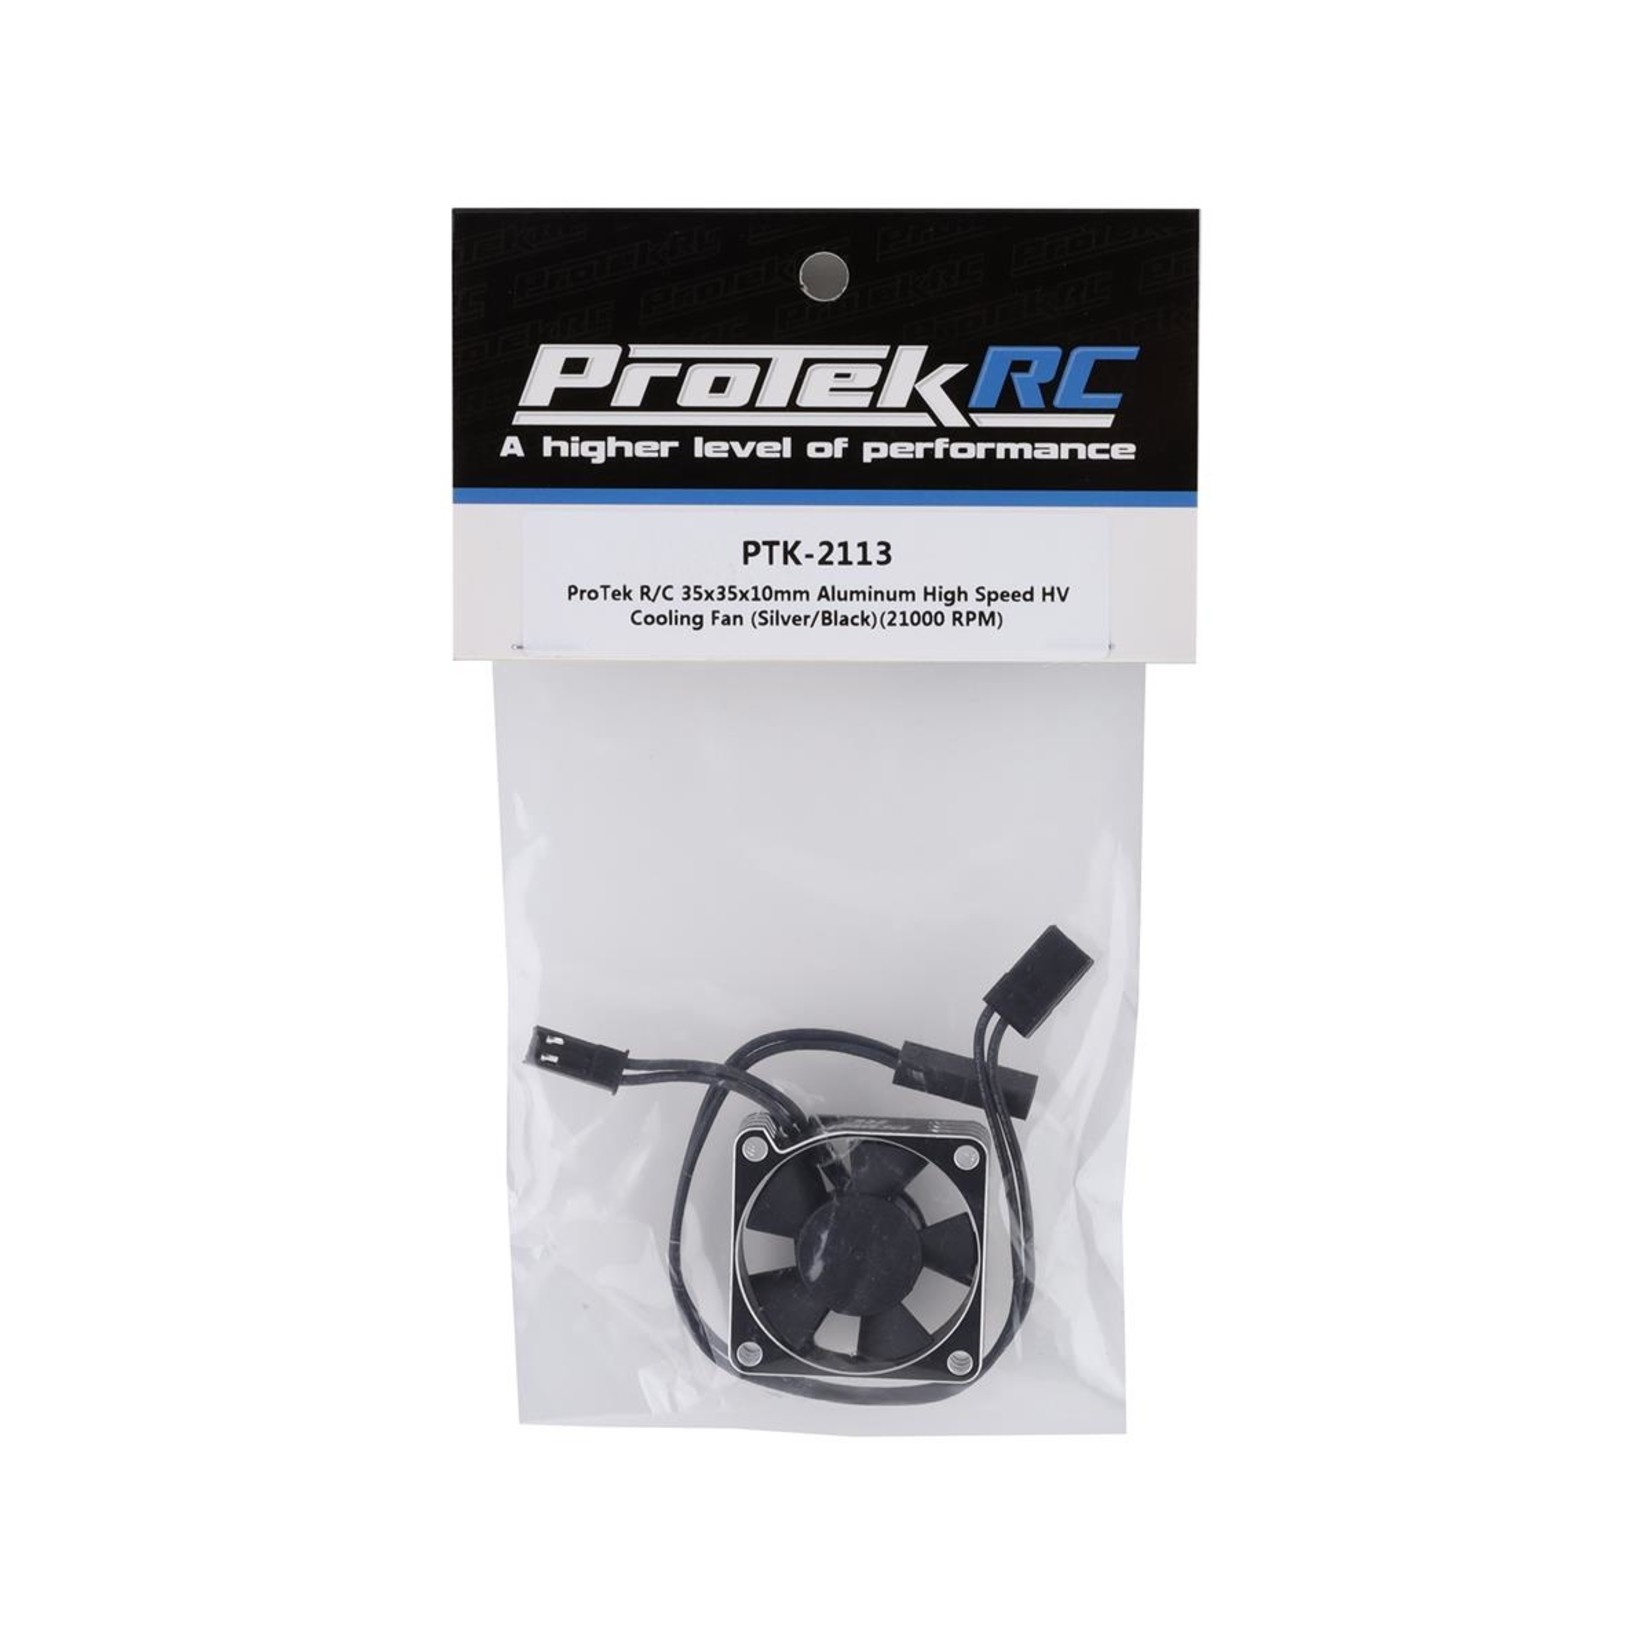 ProTek RC ProTek RC 35x35x10mm Aluminum High Speed HV Cooling Fan (Silver/Black) #PTK-2113